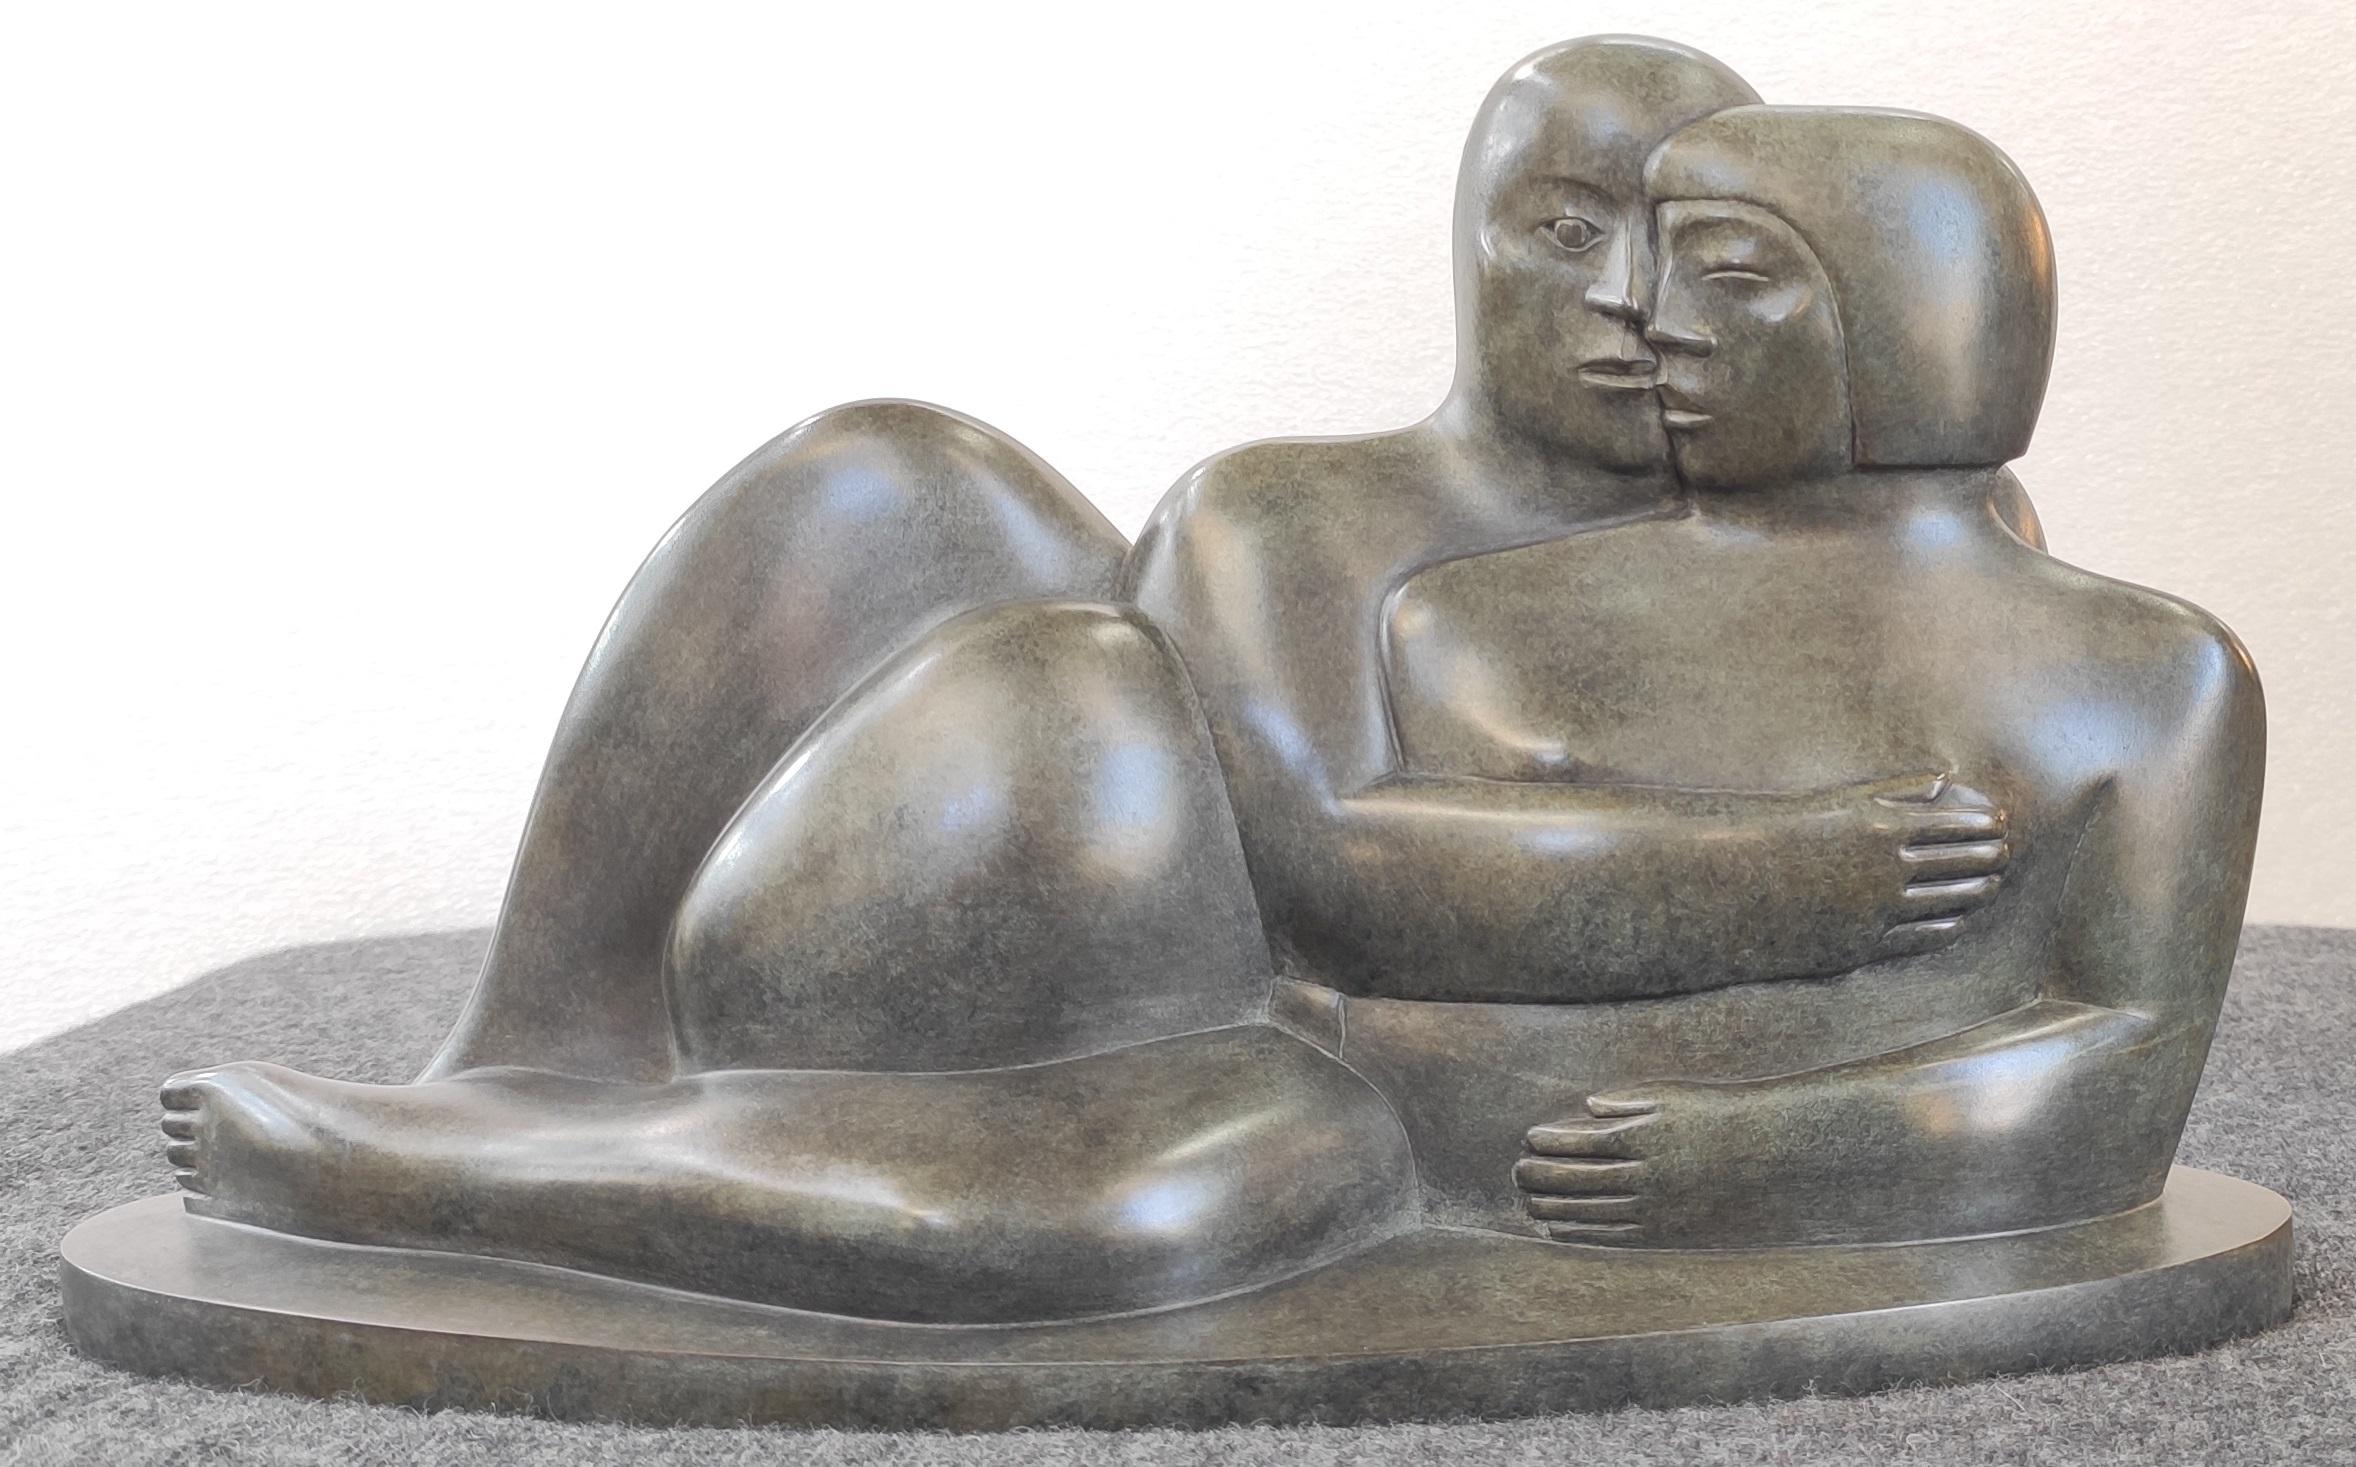 KOBE Figurative Sculpture - Les Amants II Bronze Sculpture Lovers People Together Man Woman